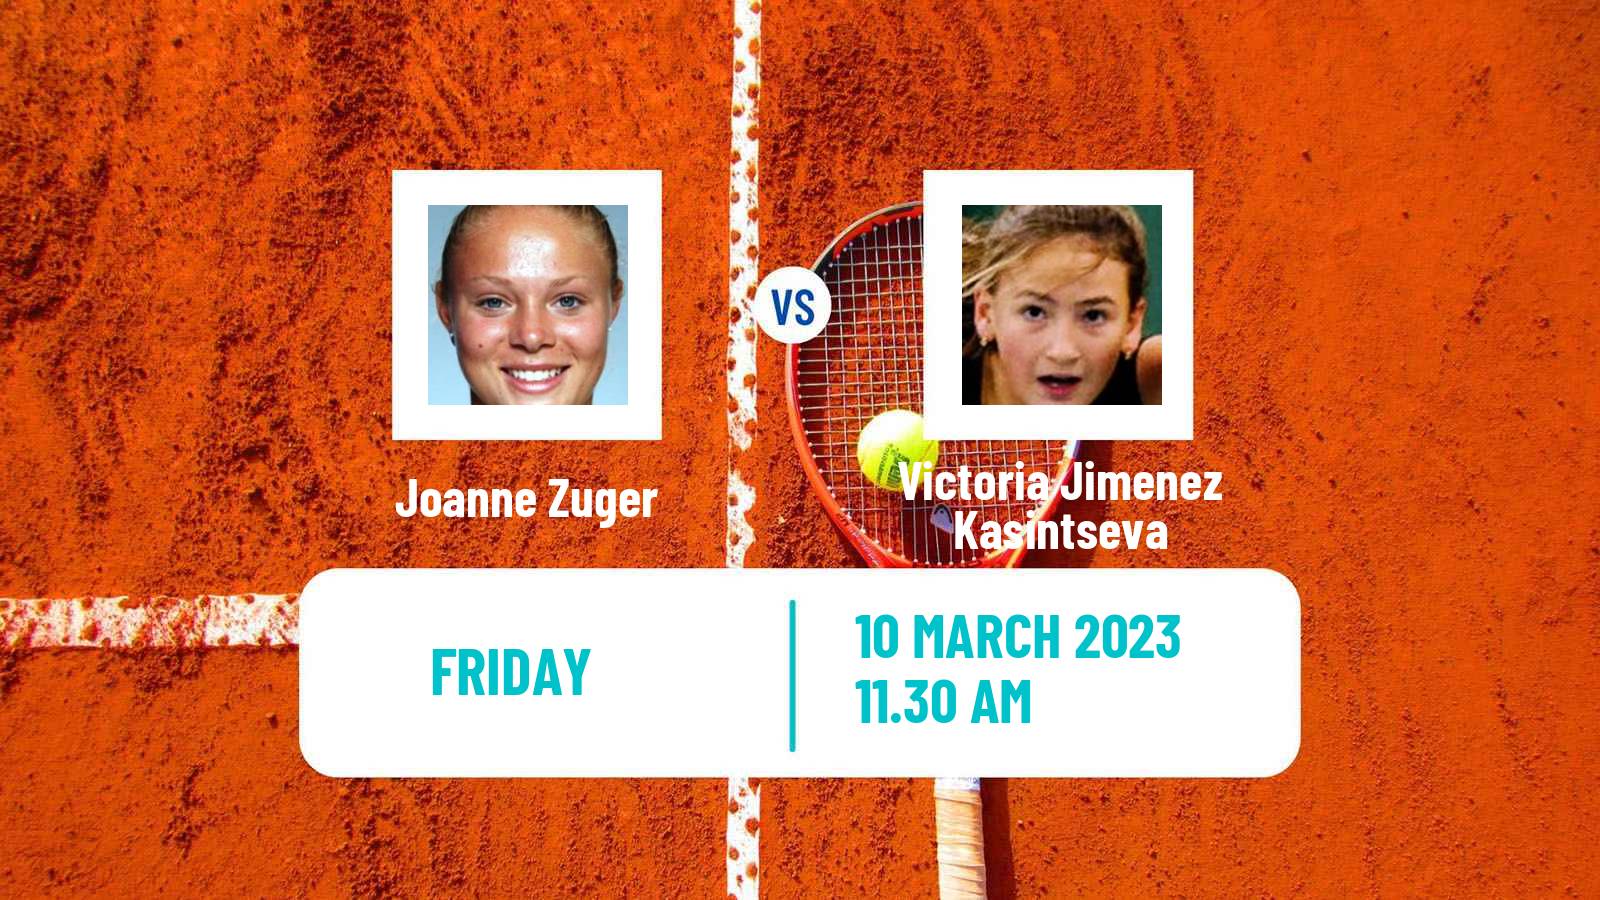 Tennis ITF Tournaments Joanne Zuger - Victoria Jimenez Kasintseva